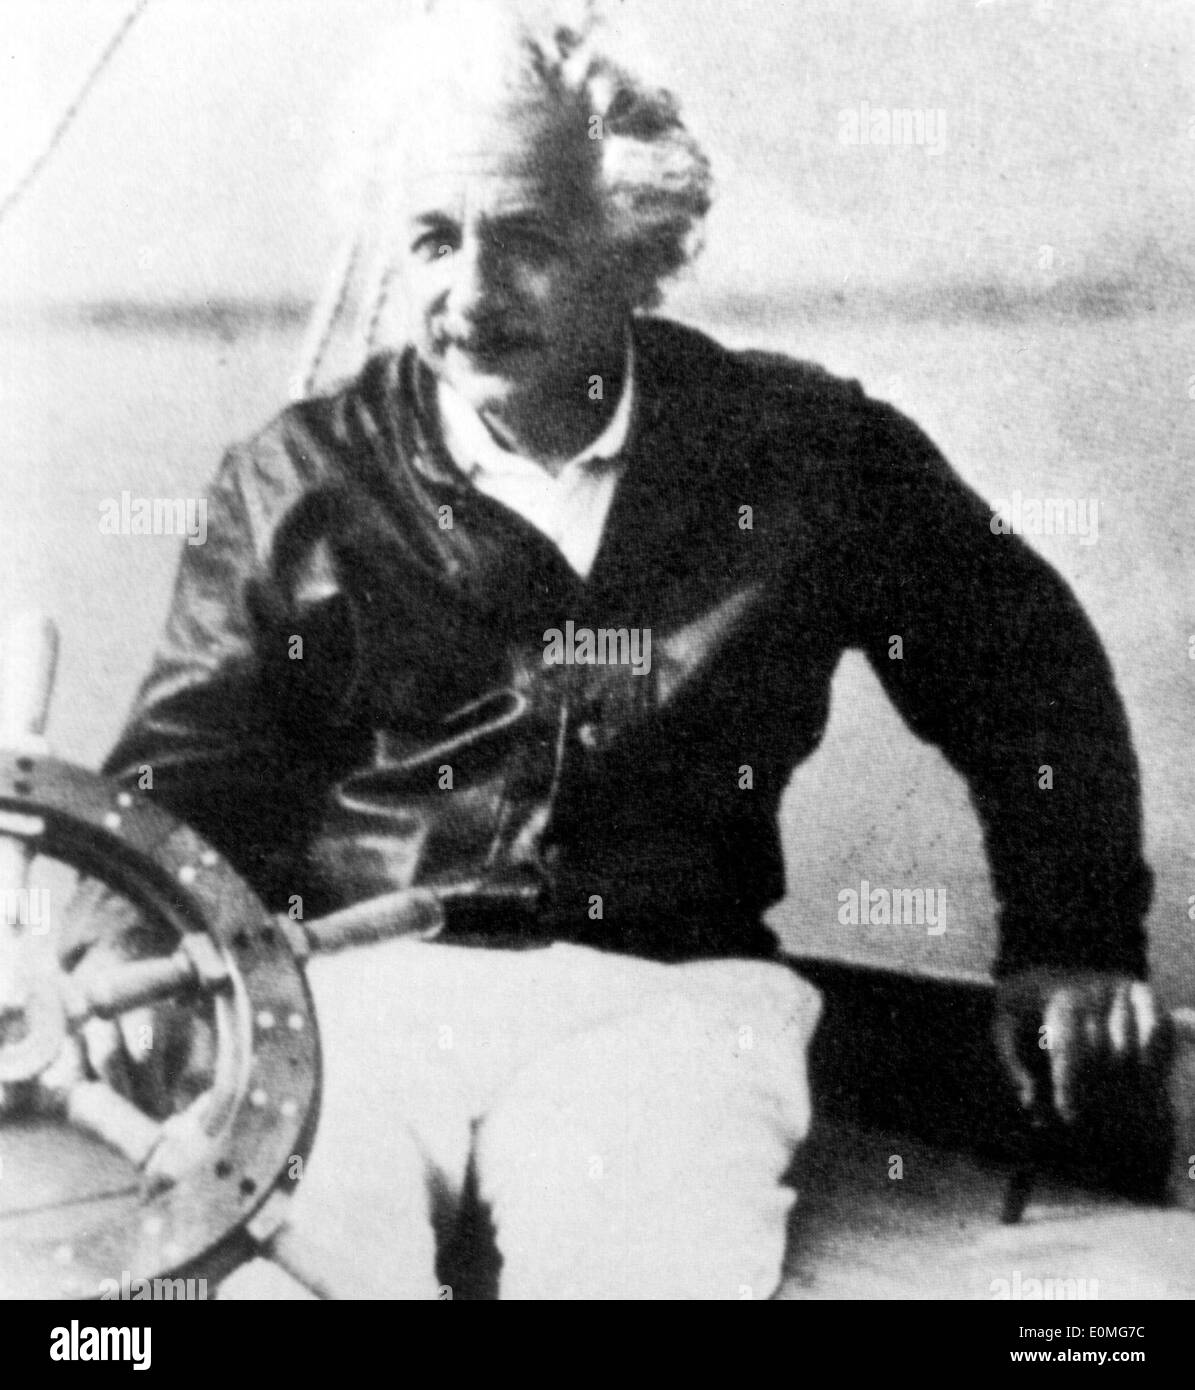 Albert Einstein dans son bateau Banque D'Images